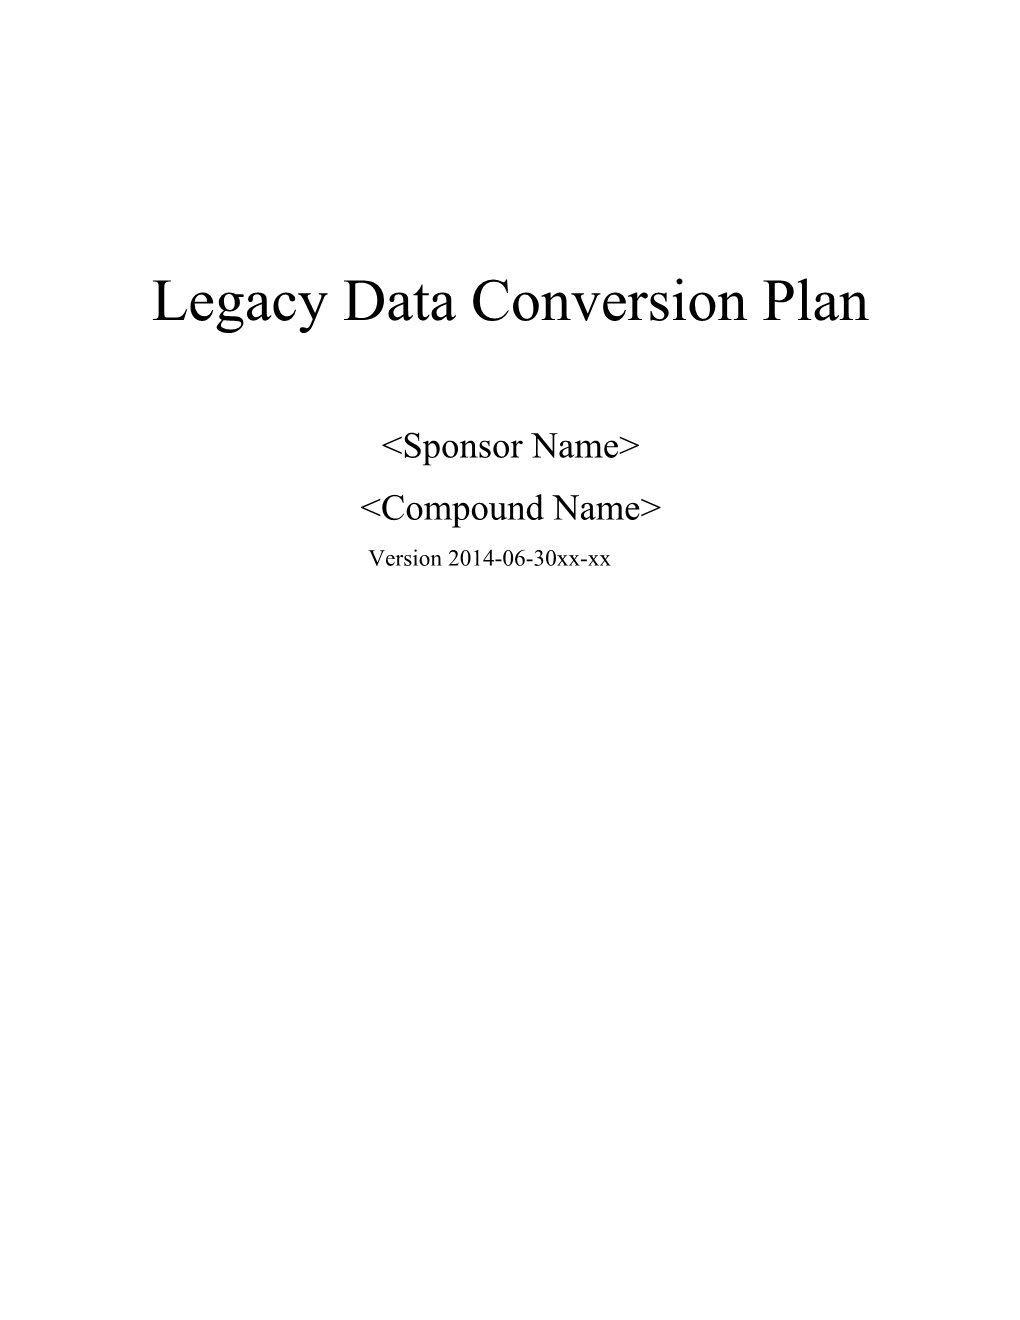 &lt;Compound Name&gt;Legacy Data Conversion Plan